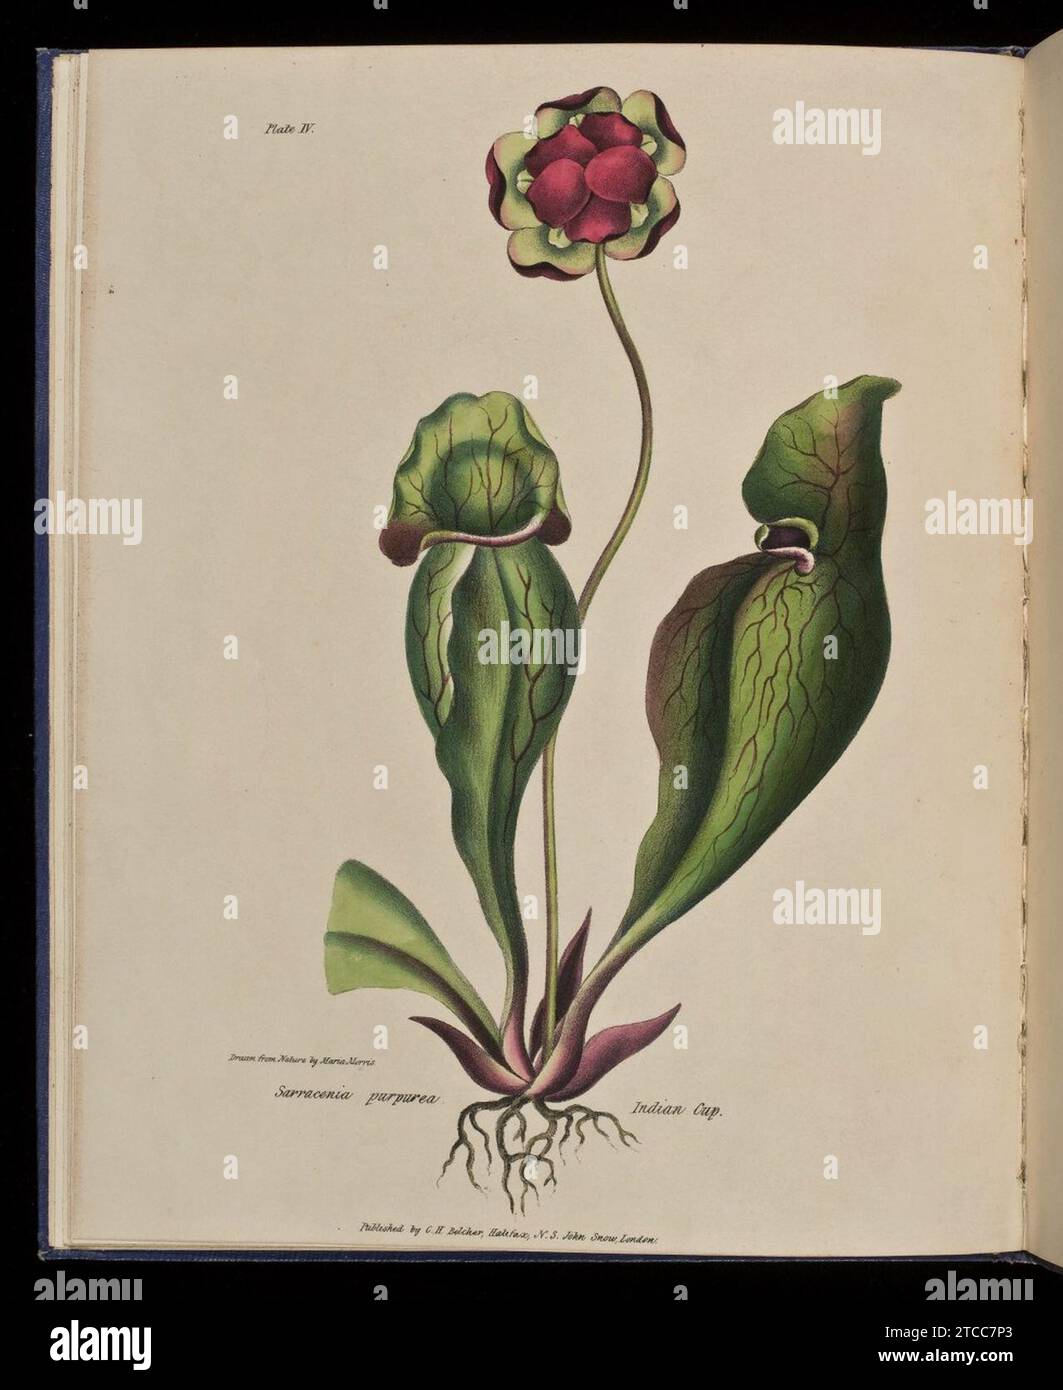 Wild Flowers of Nova Scotia Sarracenia purpurea. Indian Cup (Plate IV). Stock Photo